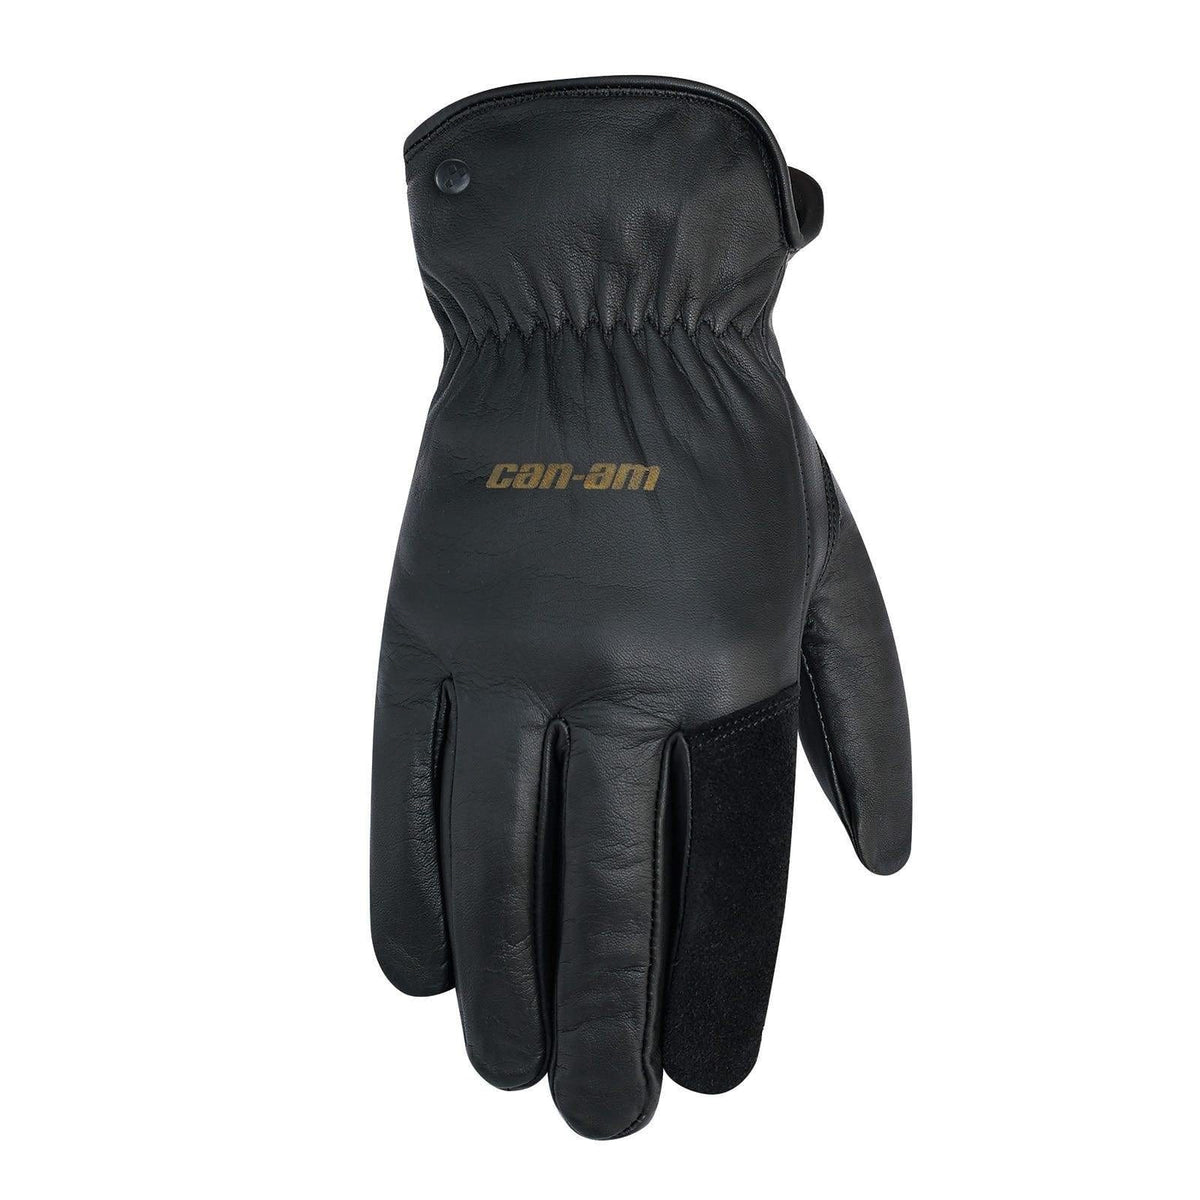 Blake Leather gloves / Black / M